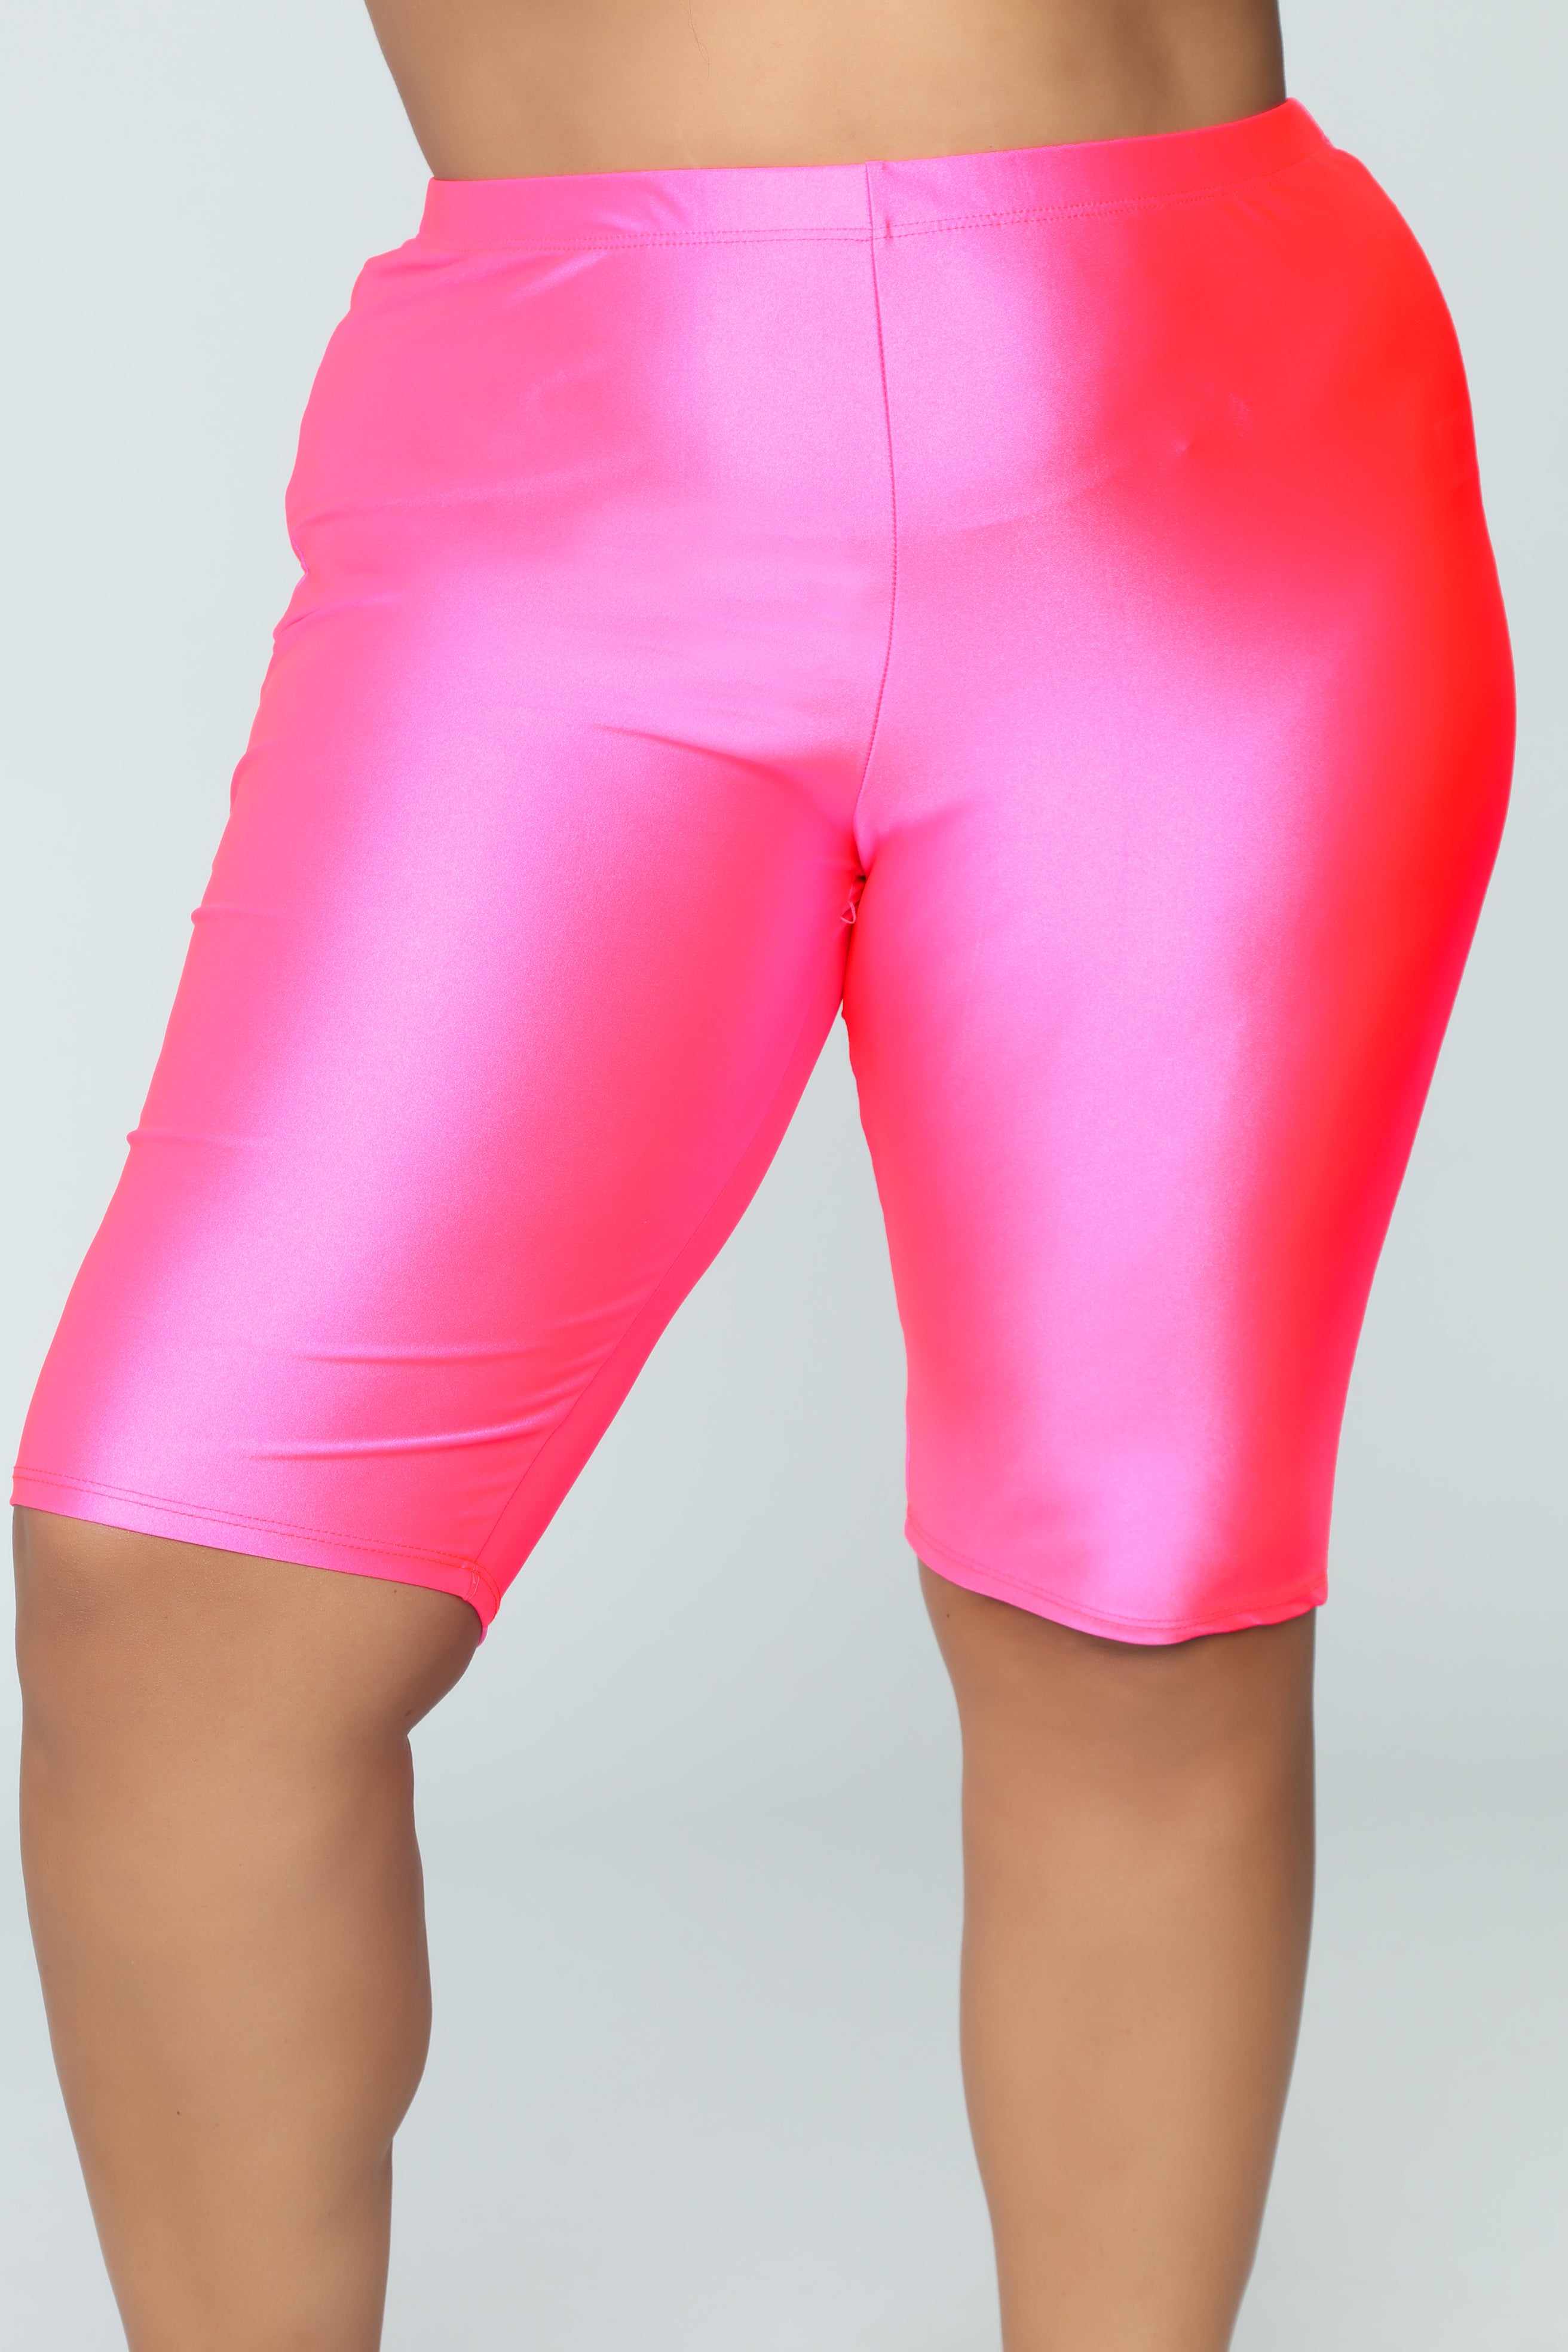 Curves For Days Biker Shorts - Hot Pink